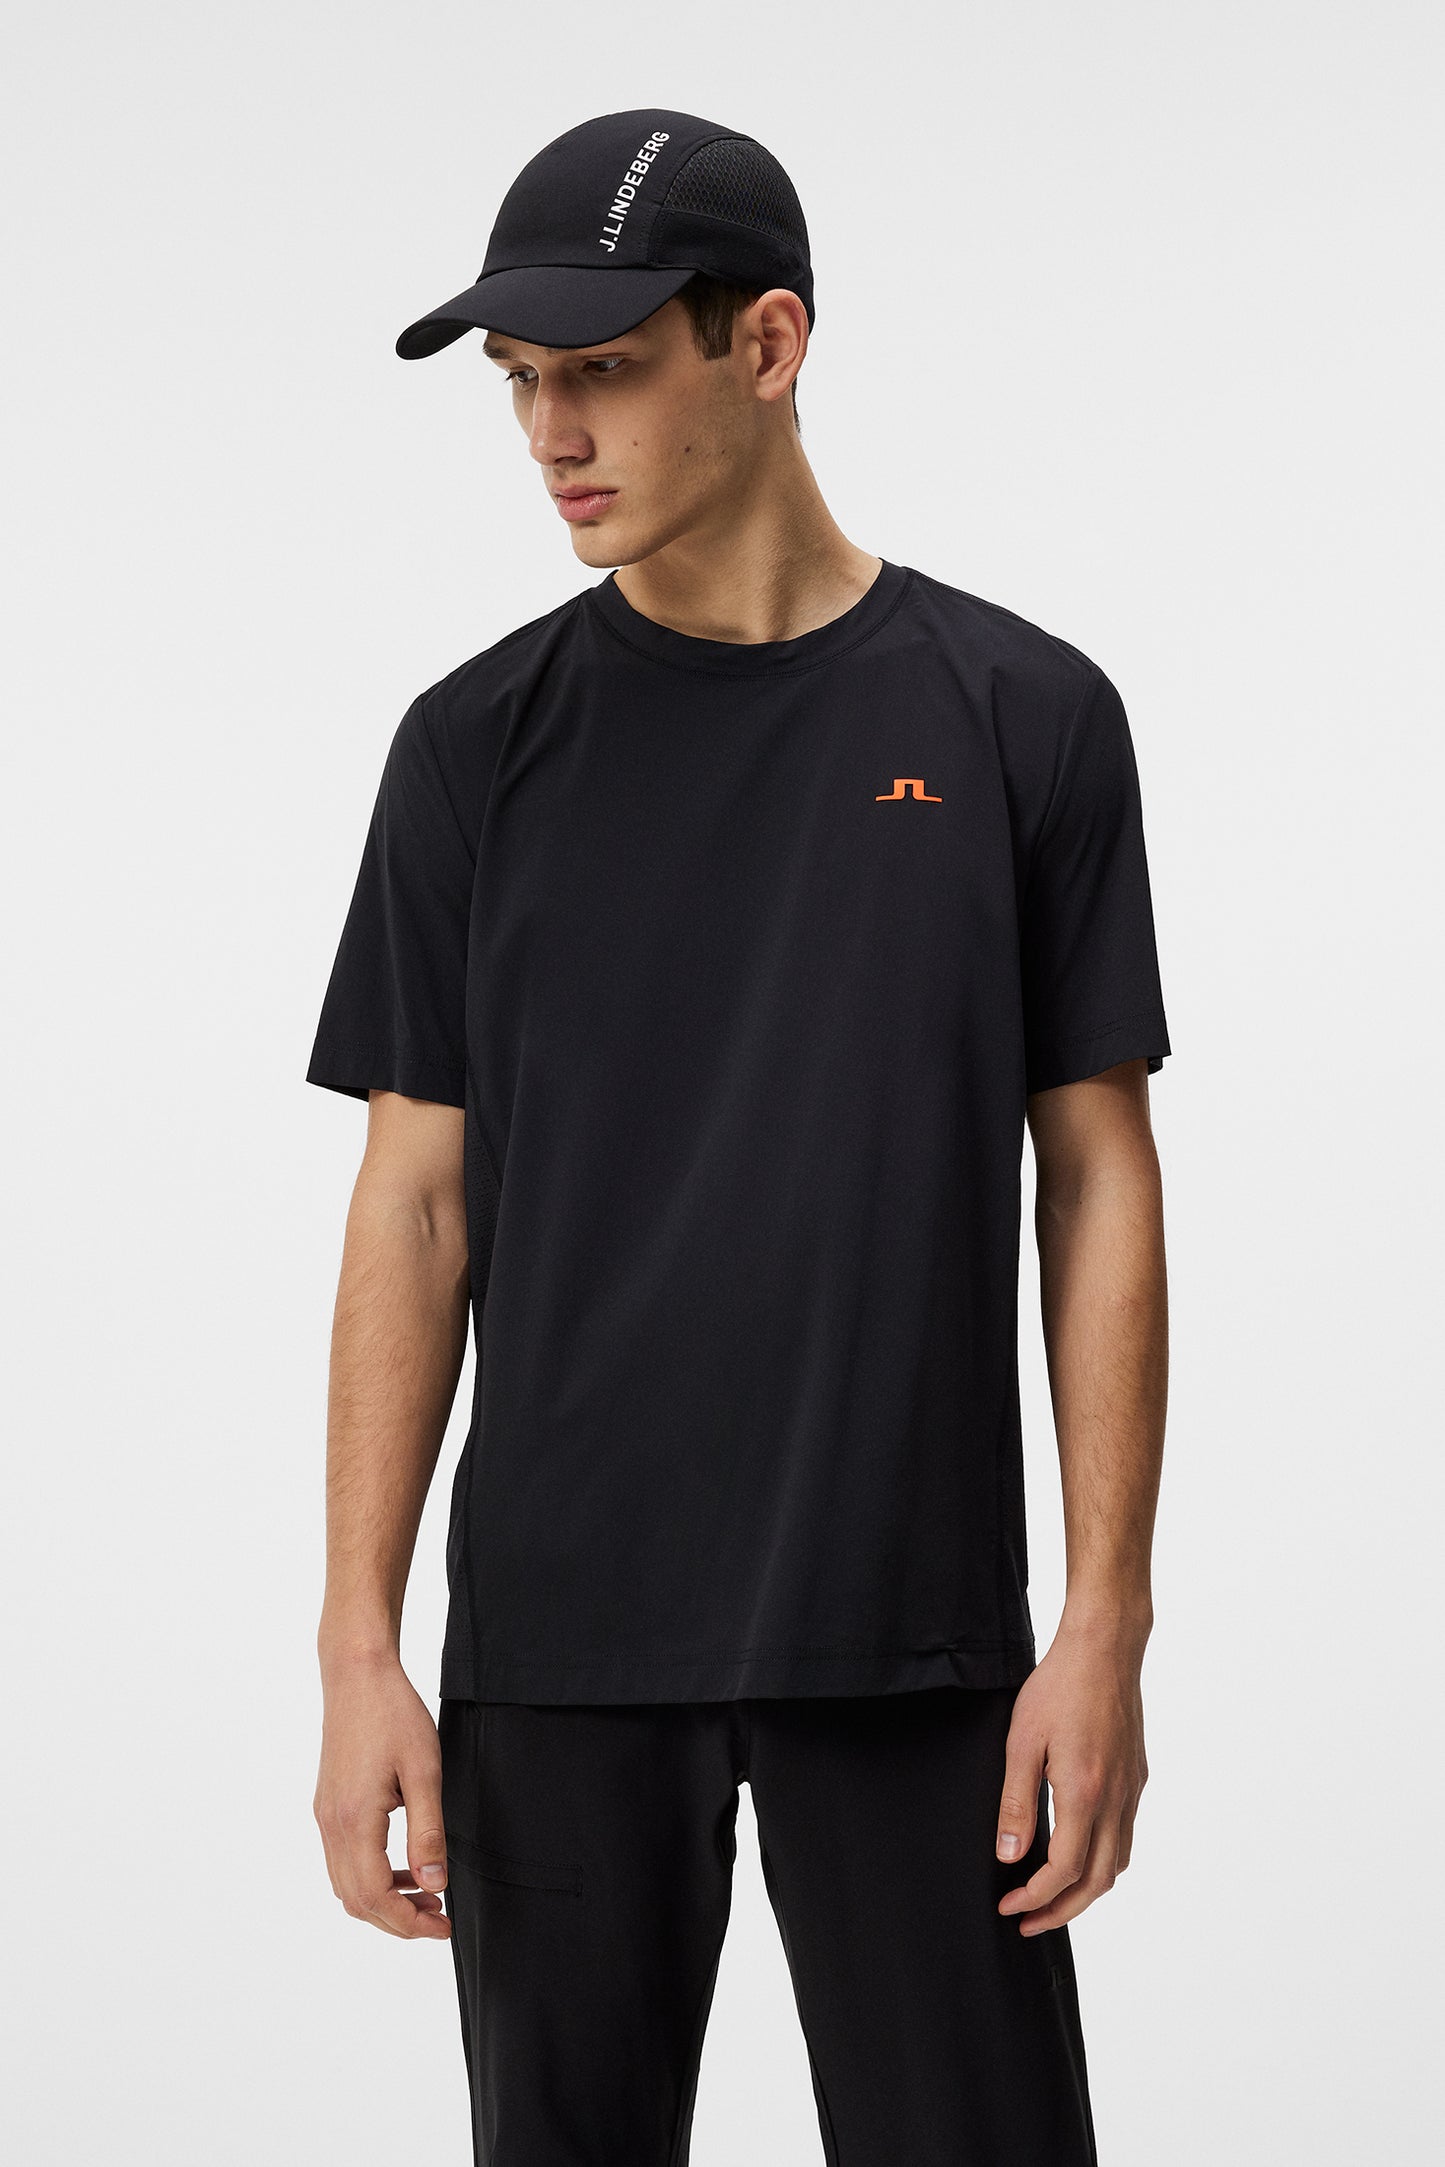 Tomas Pro Pack T-Shirt / Black – J.Lindeberg